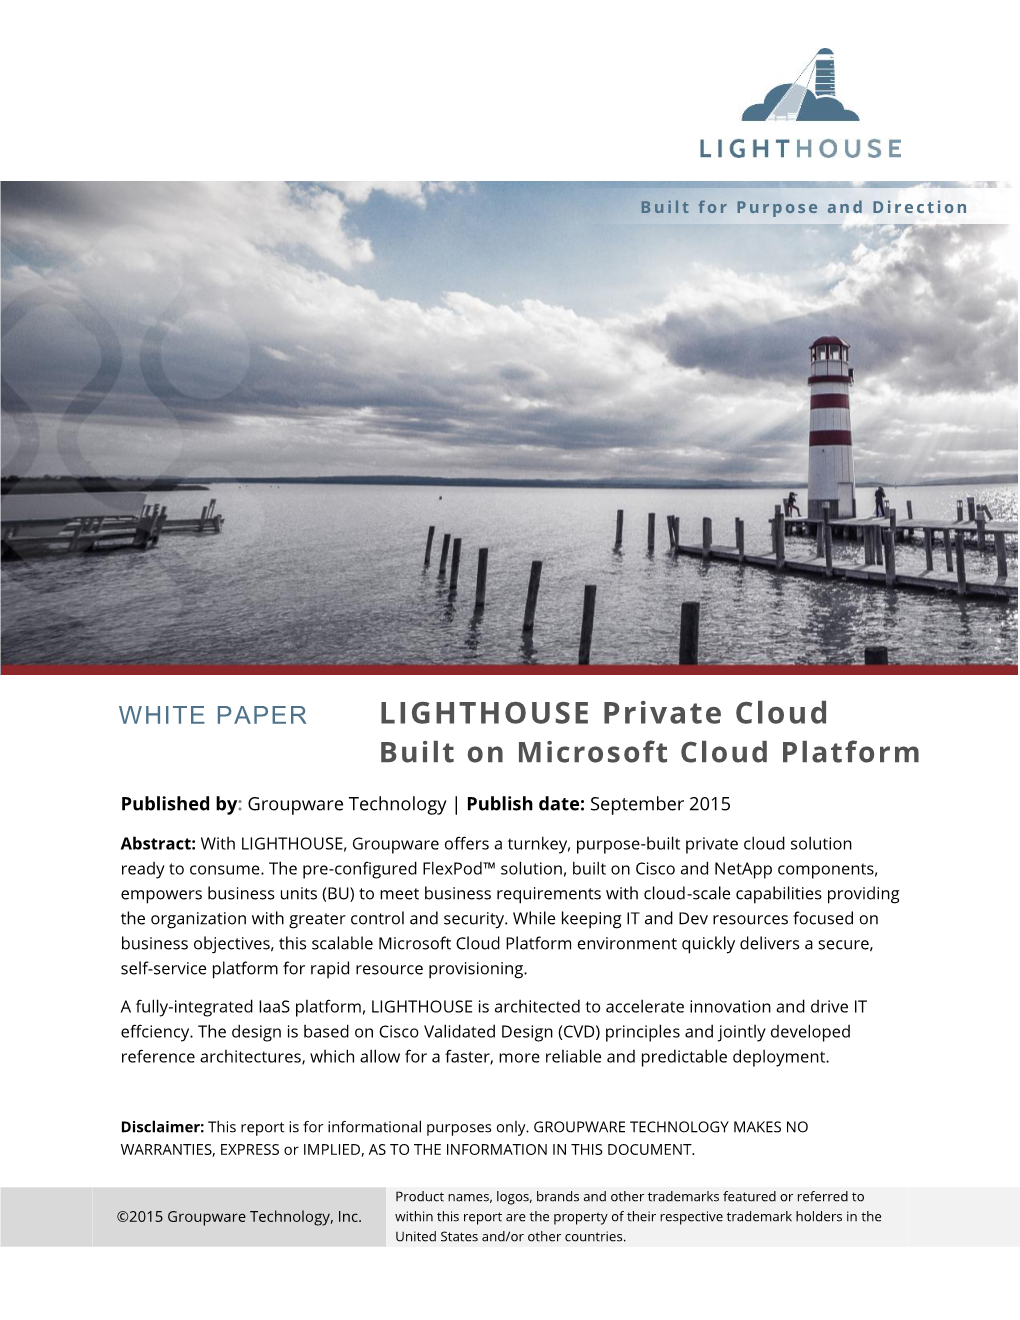 LIGHTHOUSE Private Cloud Built on Microsoft Cloud Platform